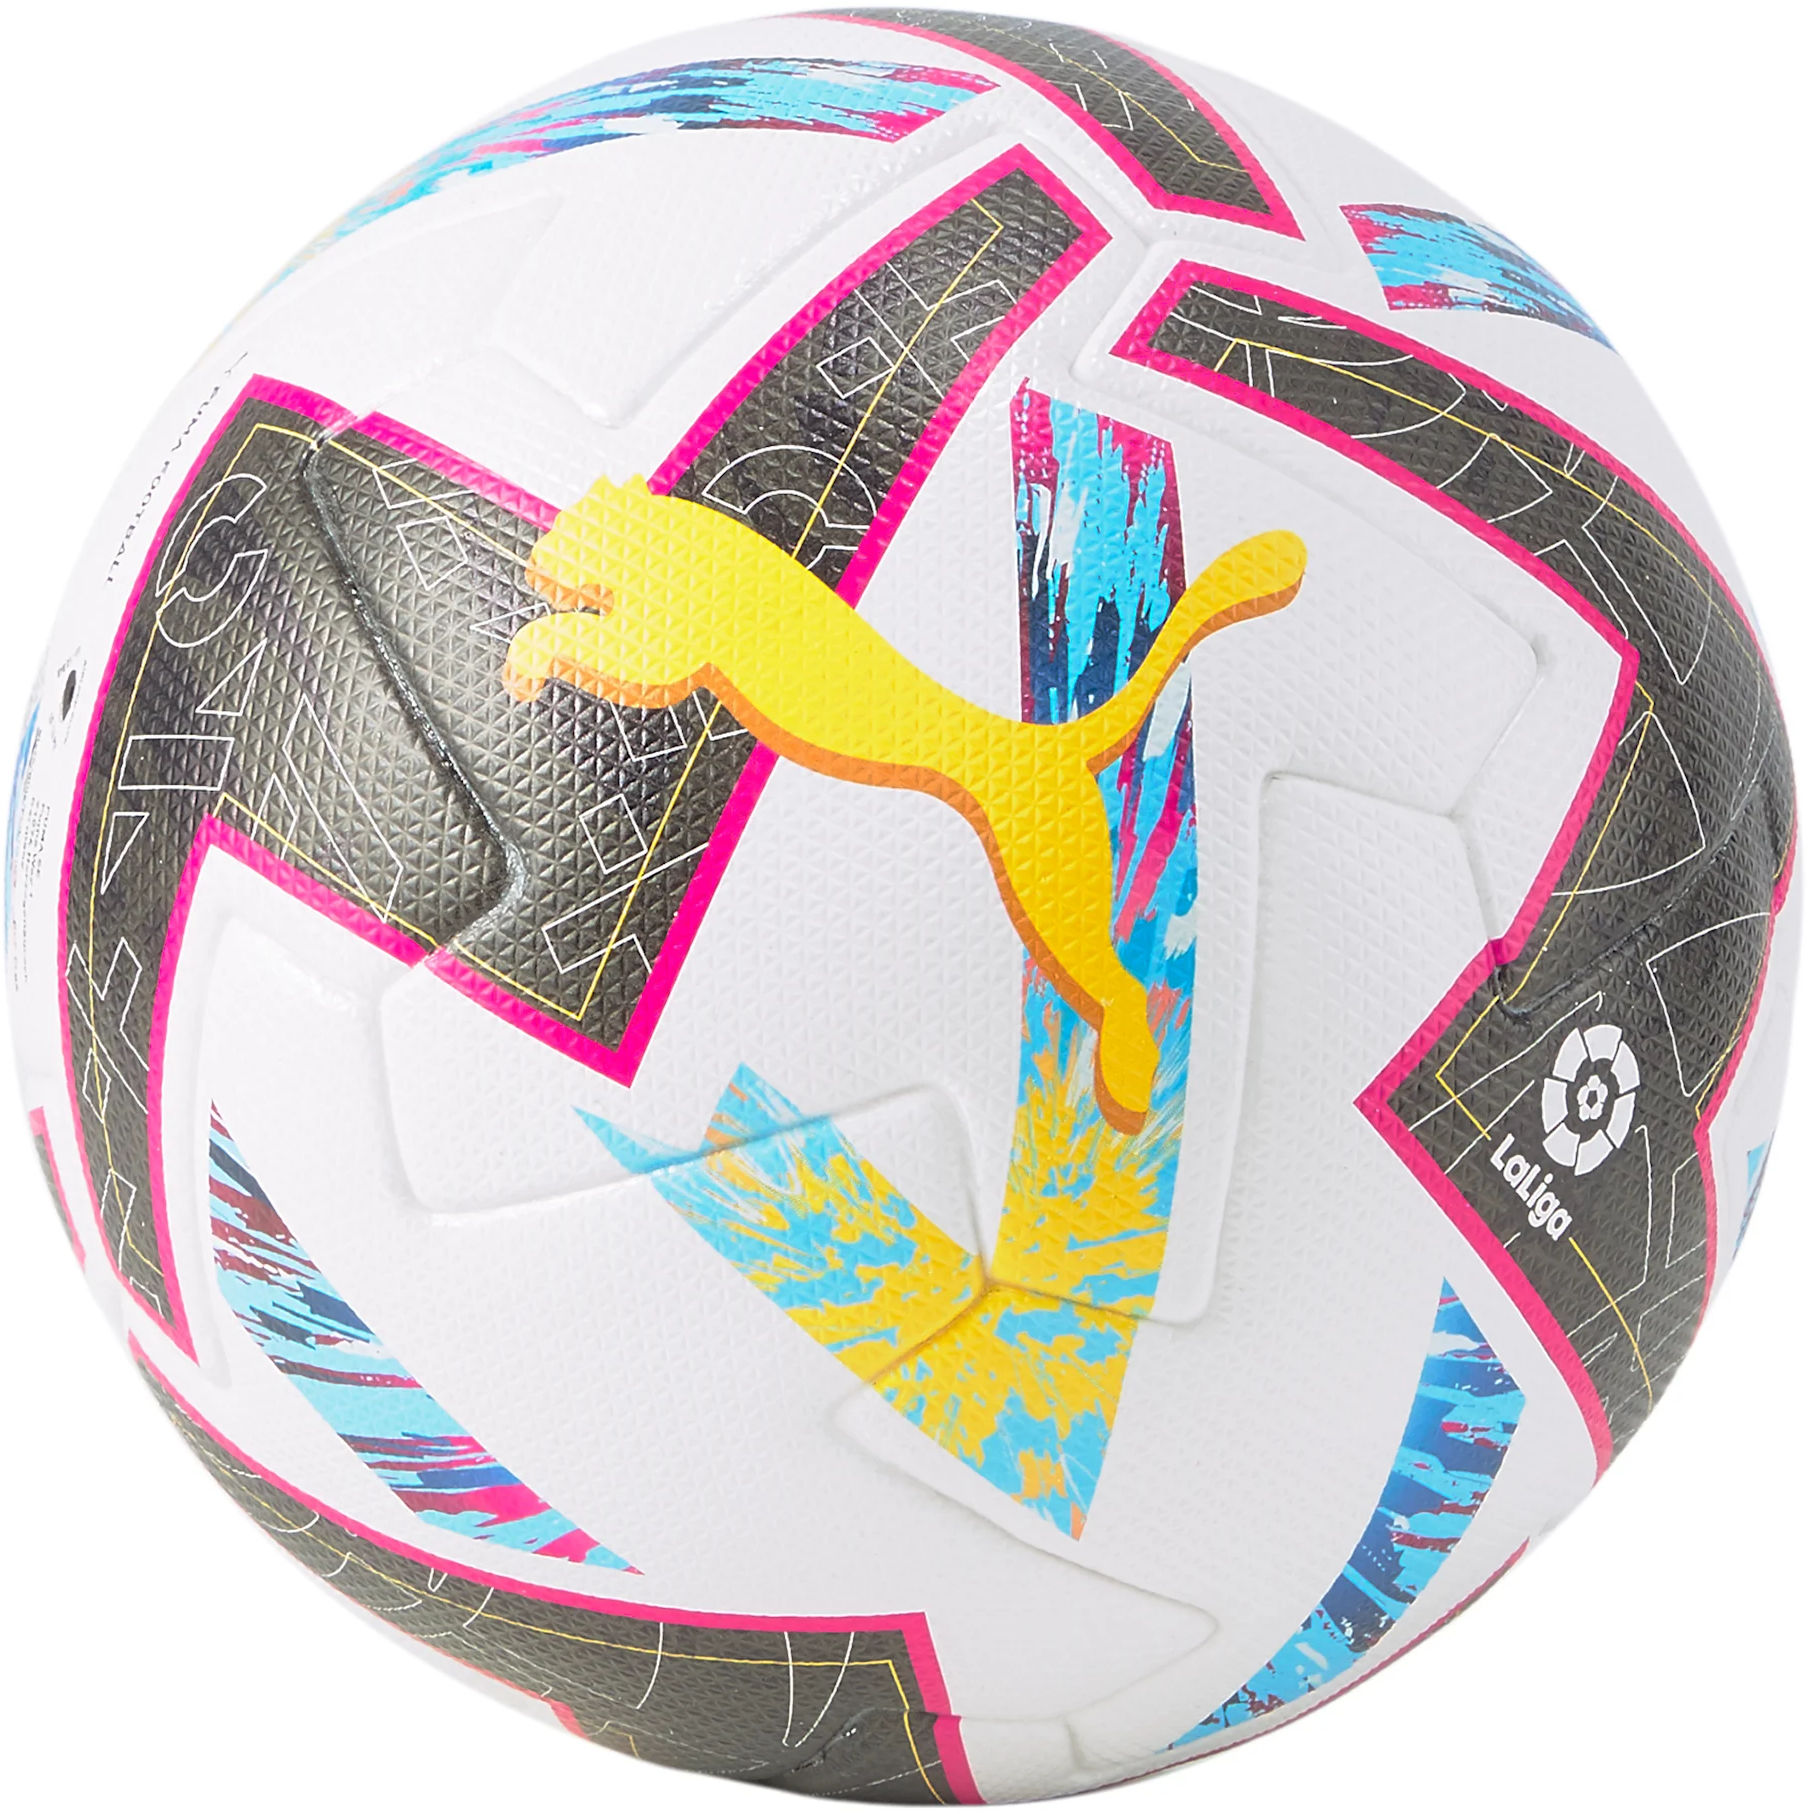 Lopta Puma Orbita LaLiga 1 (FIFA Quality Pro)